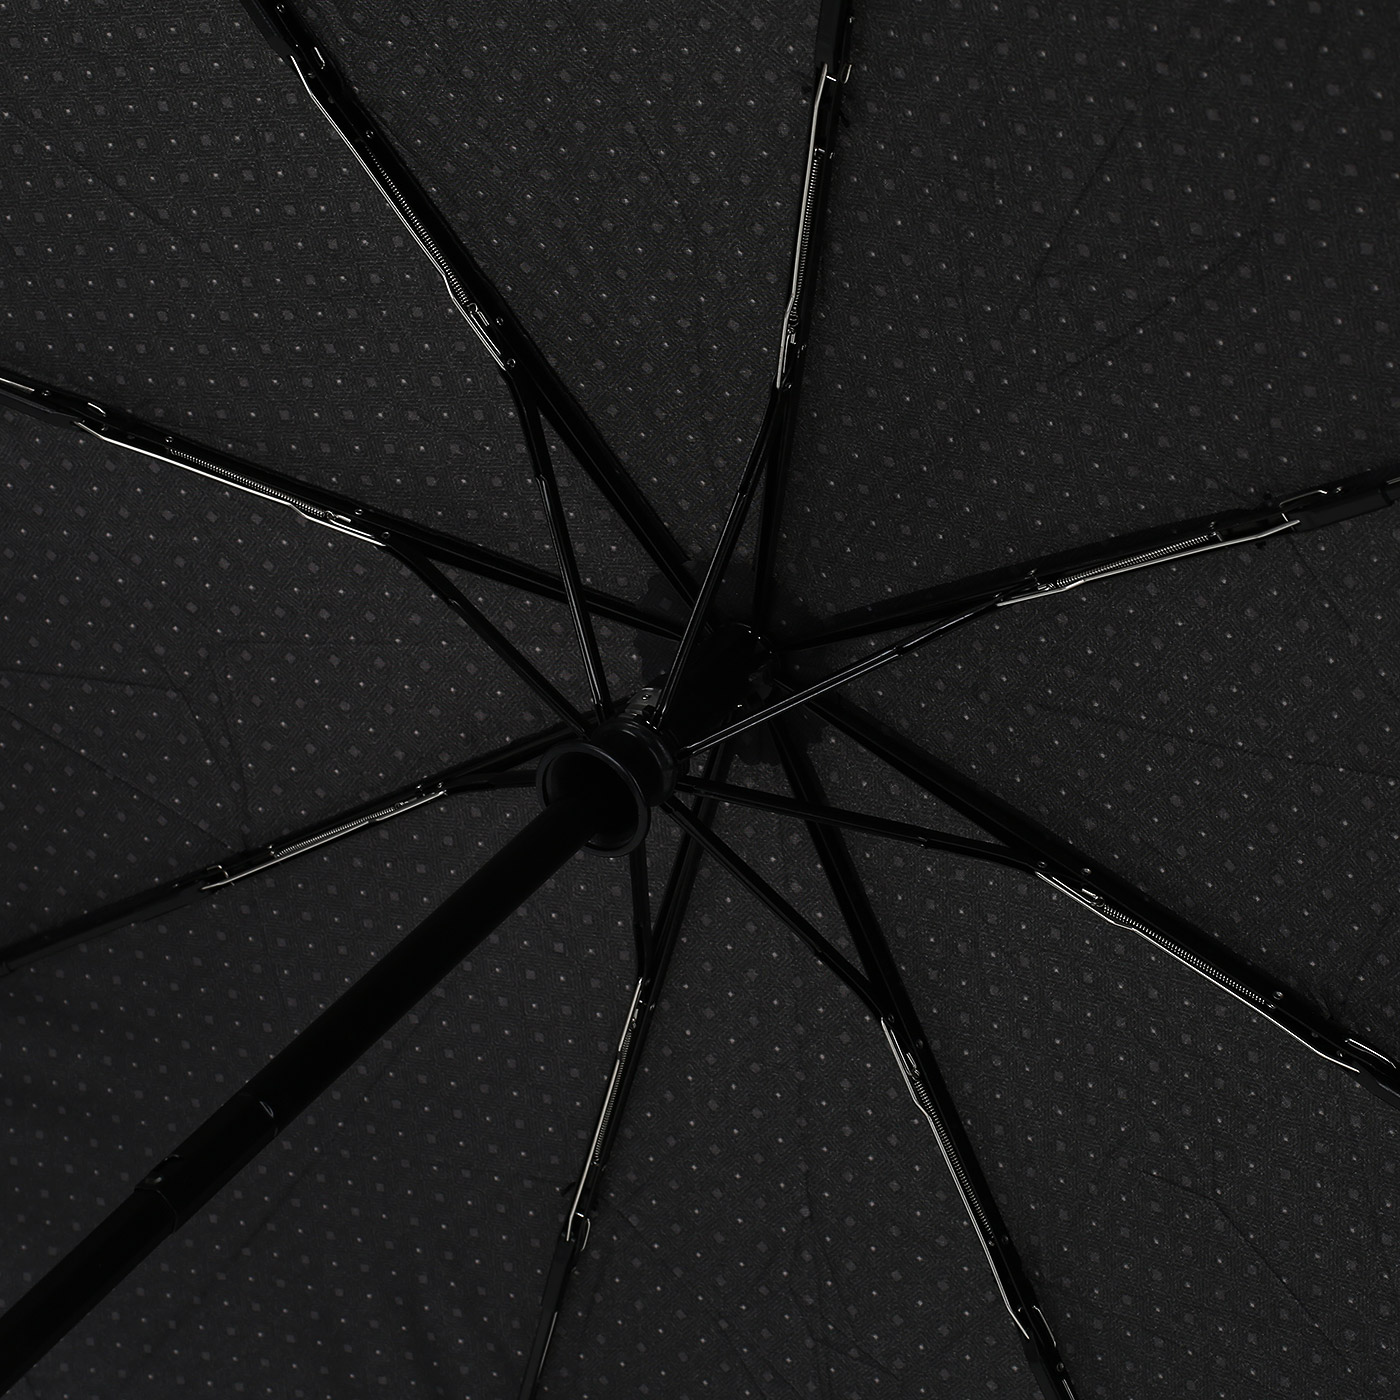 Зонт в три сложения Doppler 